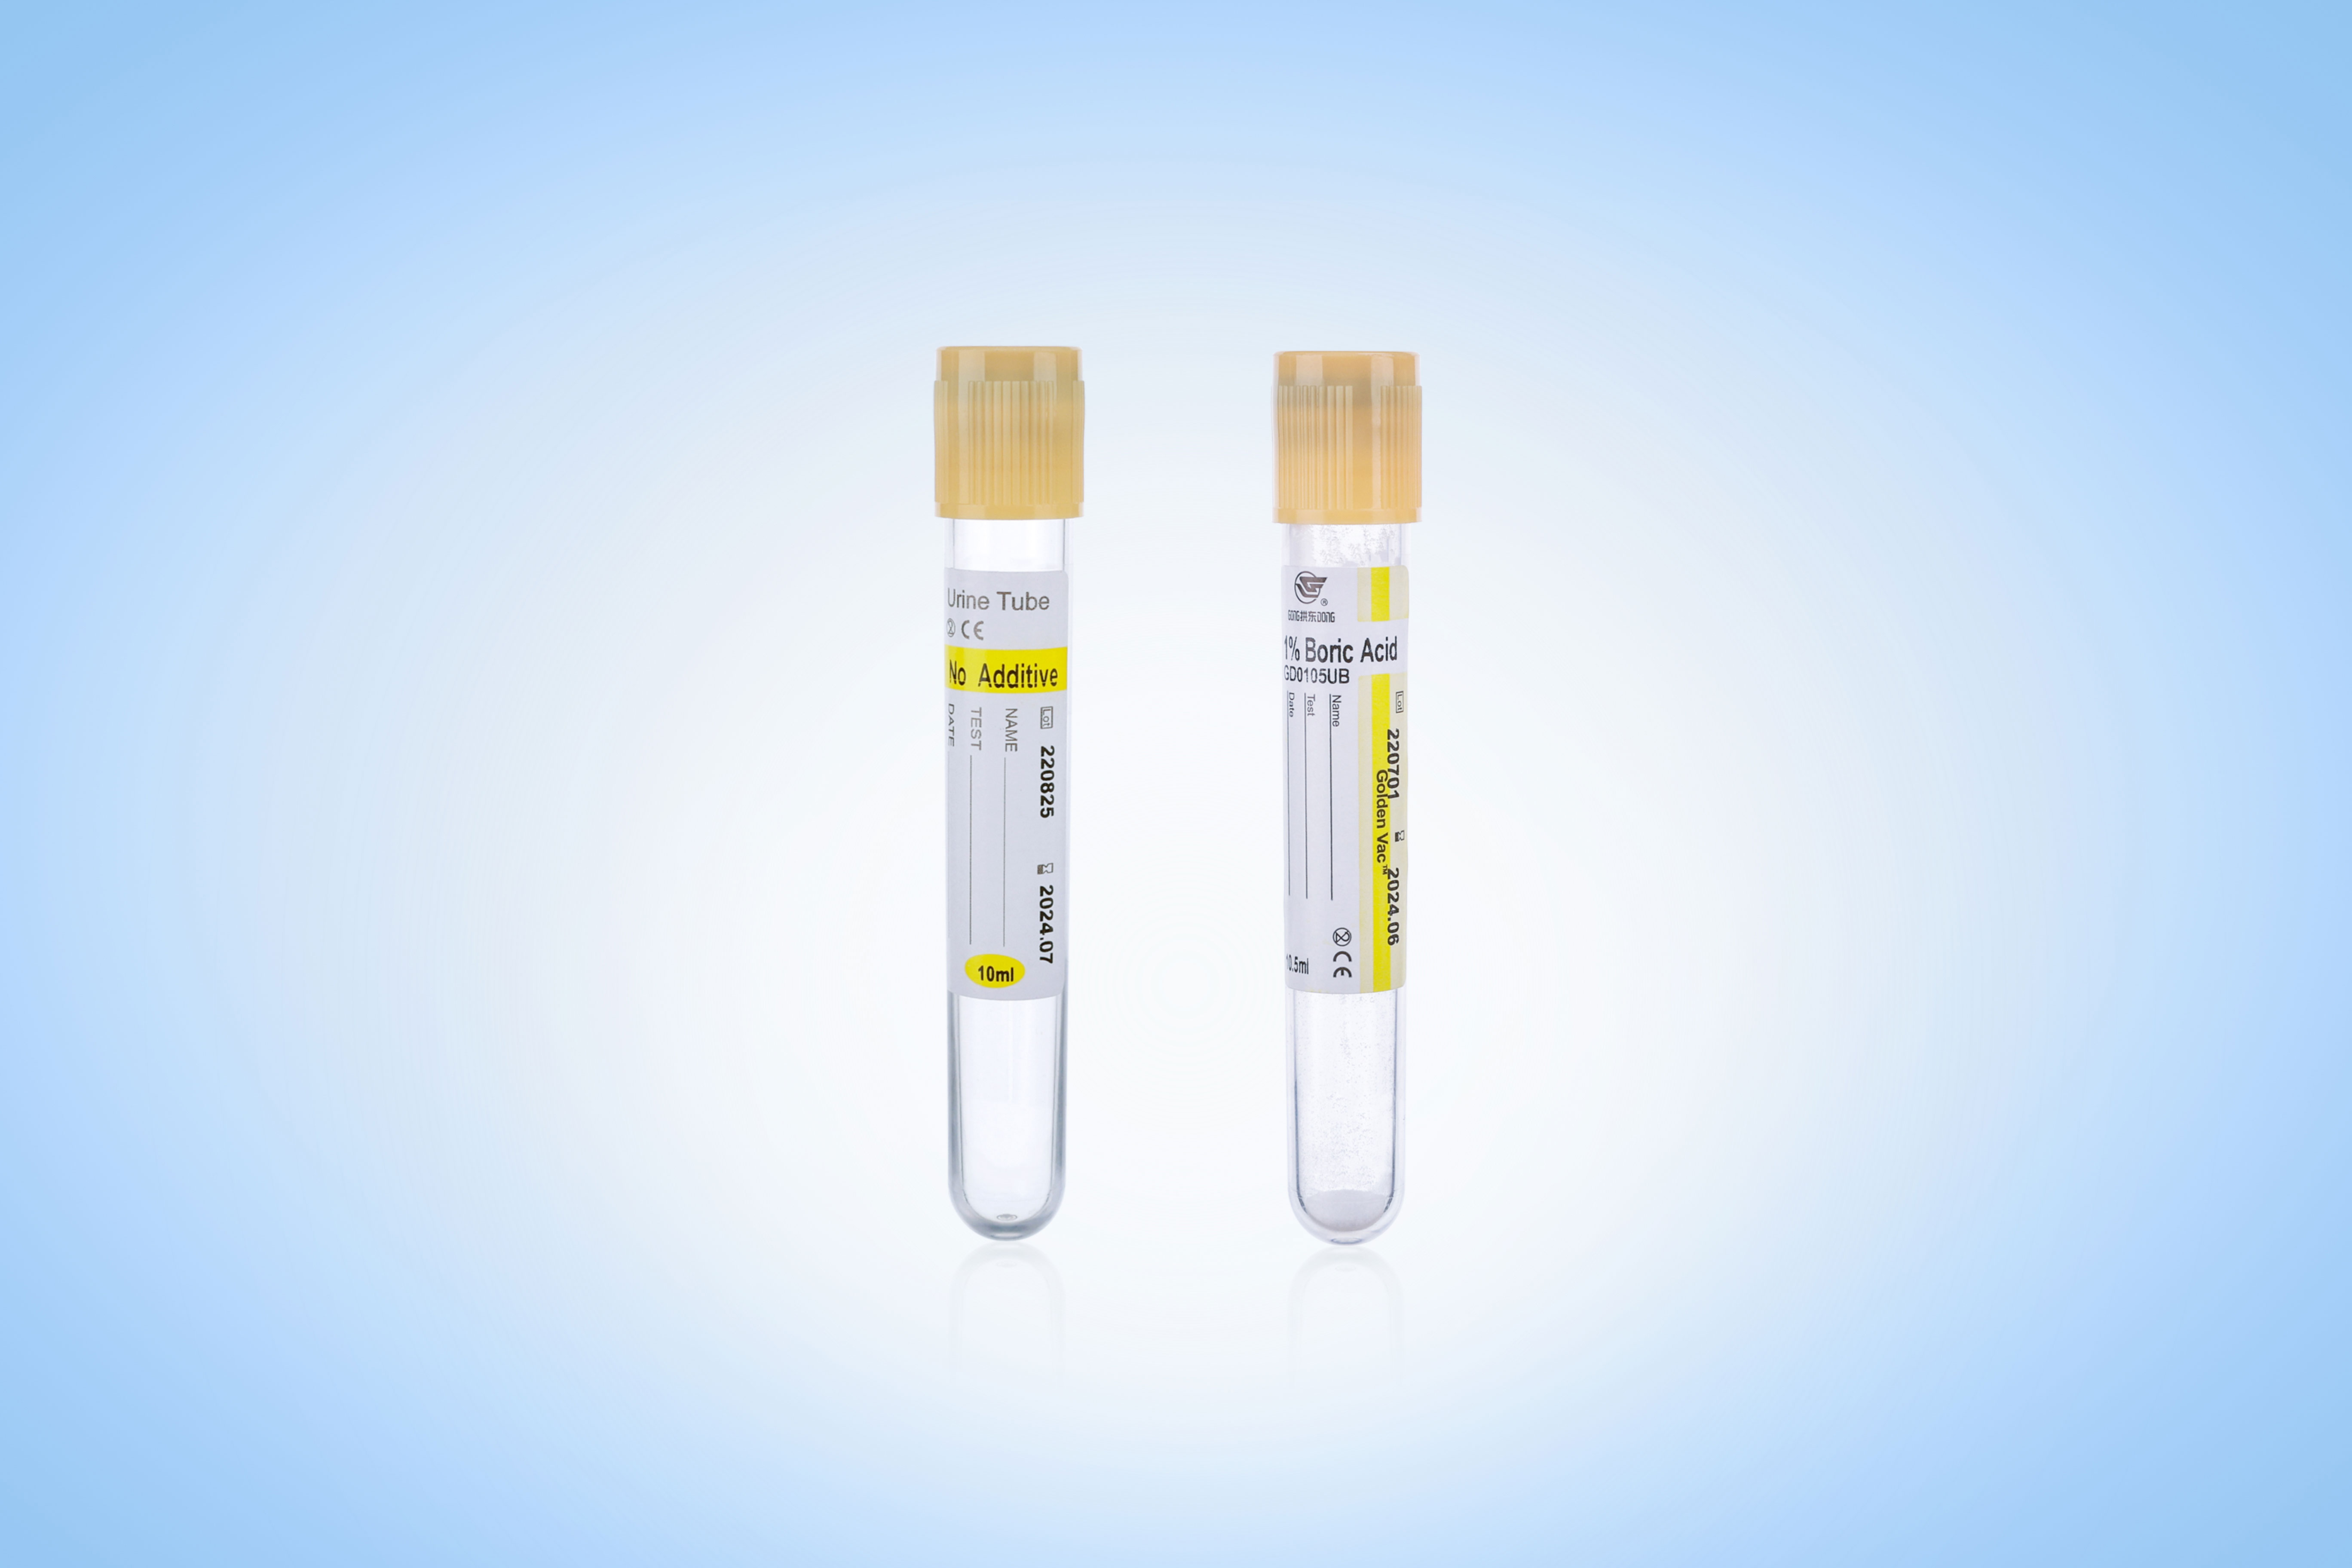 gdo105ua vacuum urine tube